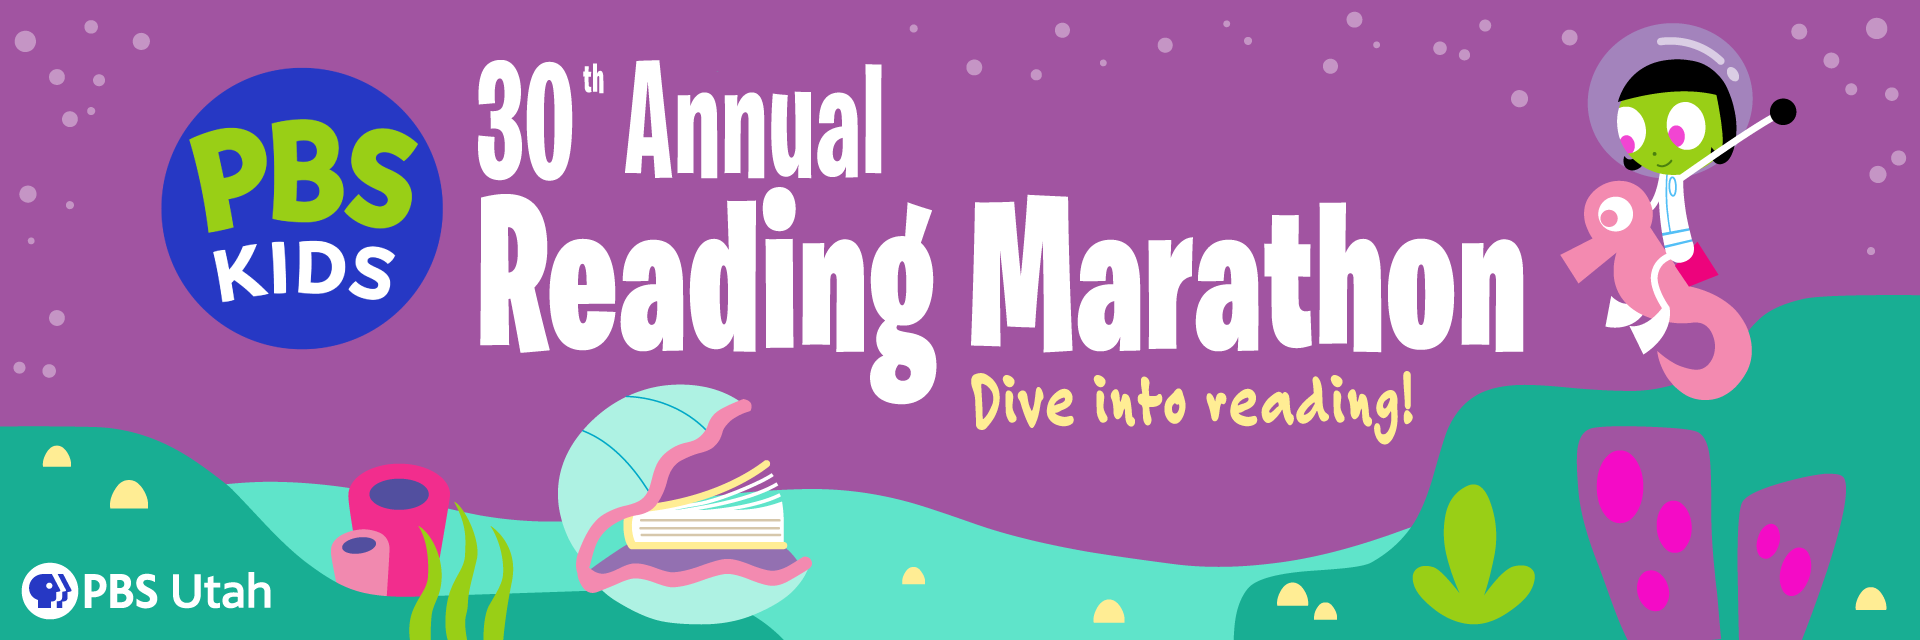 Reading Marathon Header Image